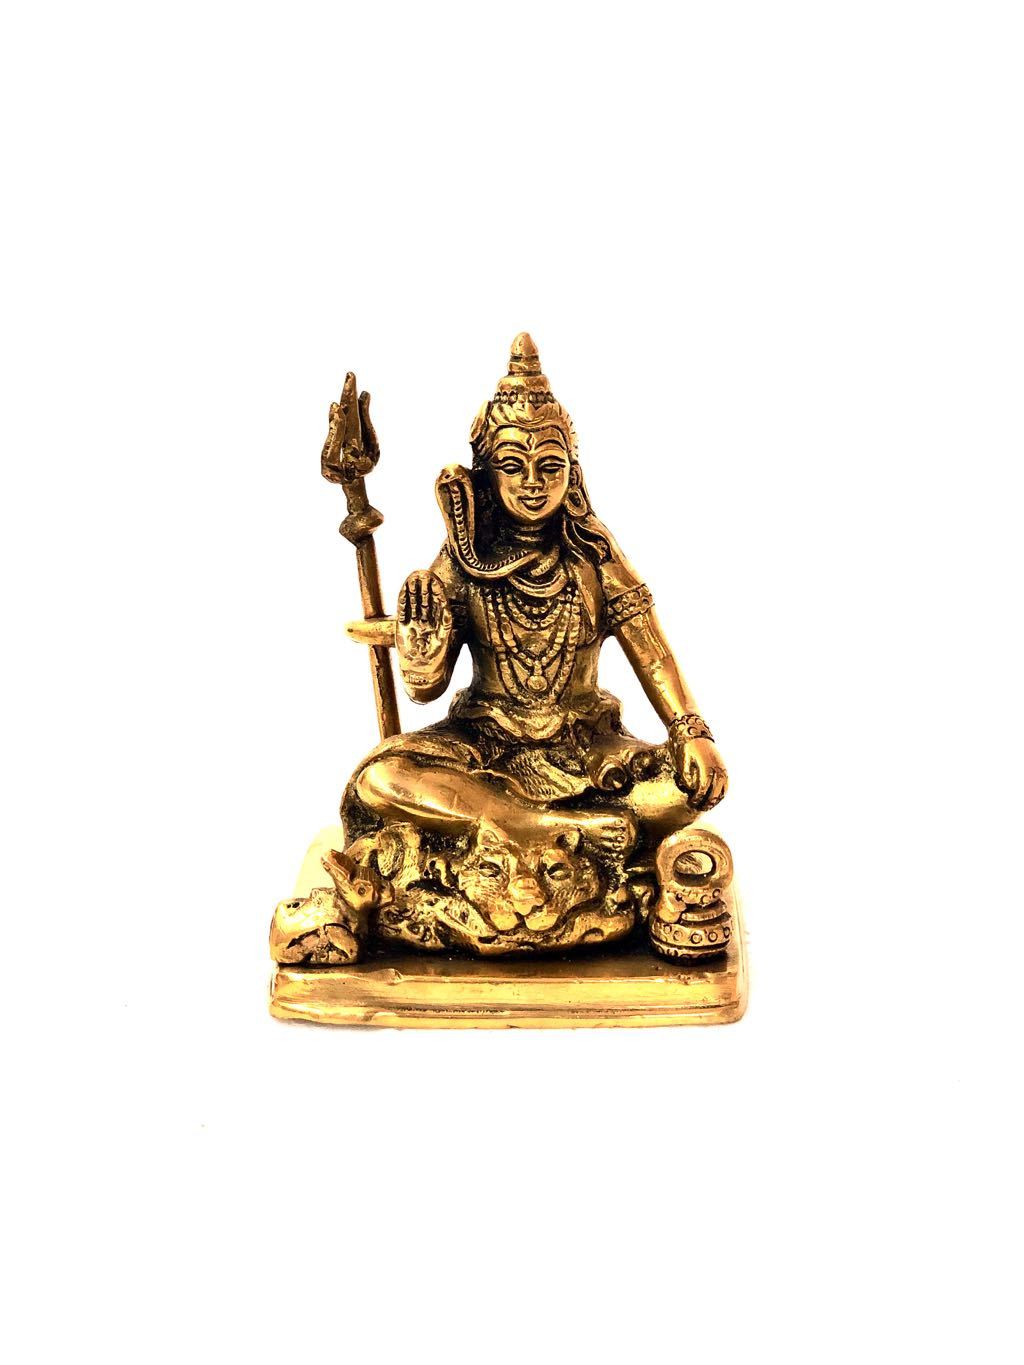 Statue Of Lord Shiva In Meditation 'Bholenath' Brass Figure Tamrapatra - Tamrapatra